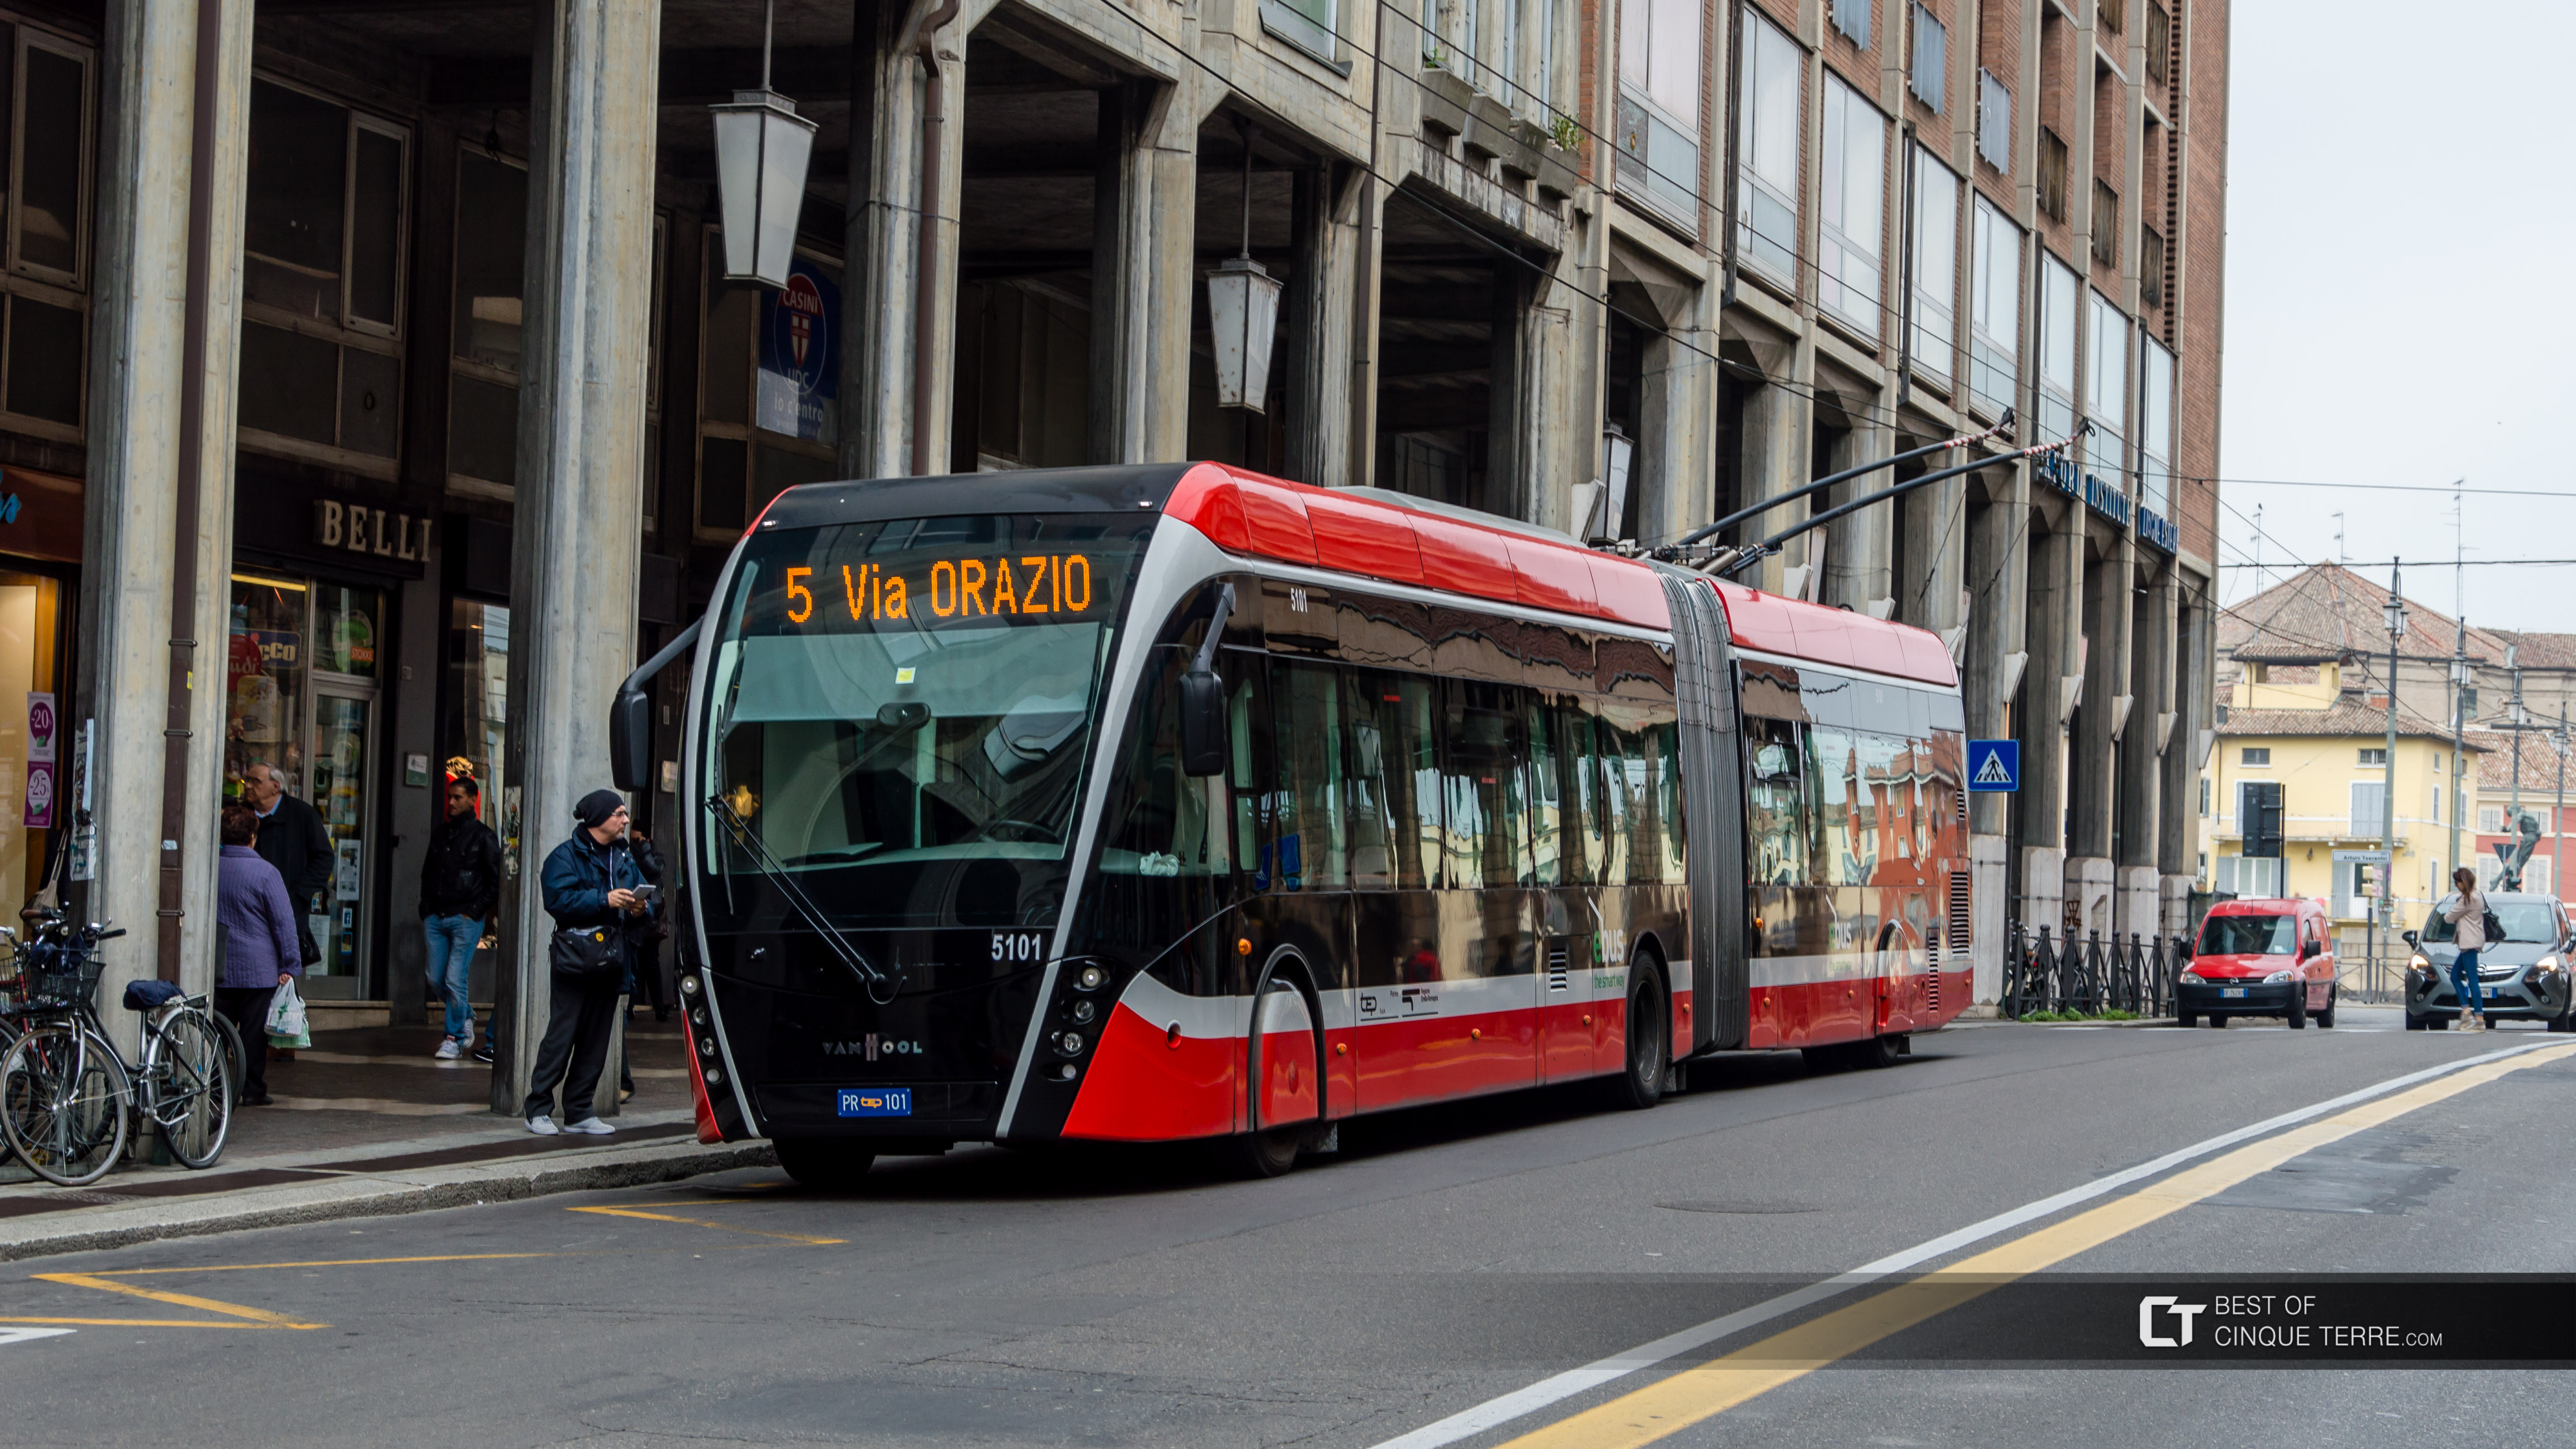 Trolleybus in via Mazzini, Parma, Italy